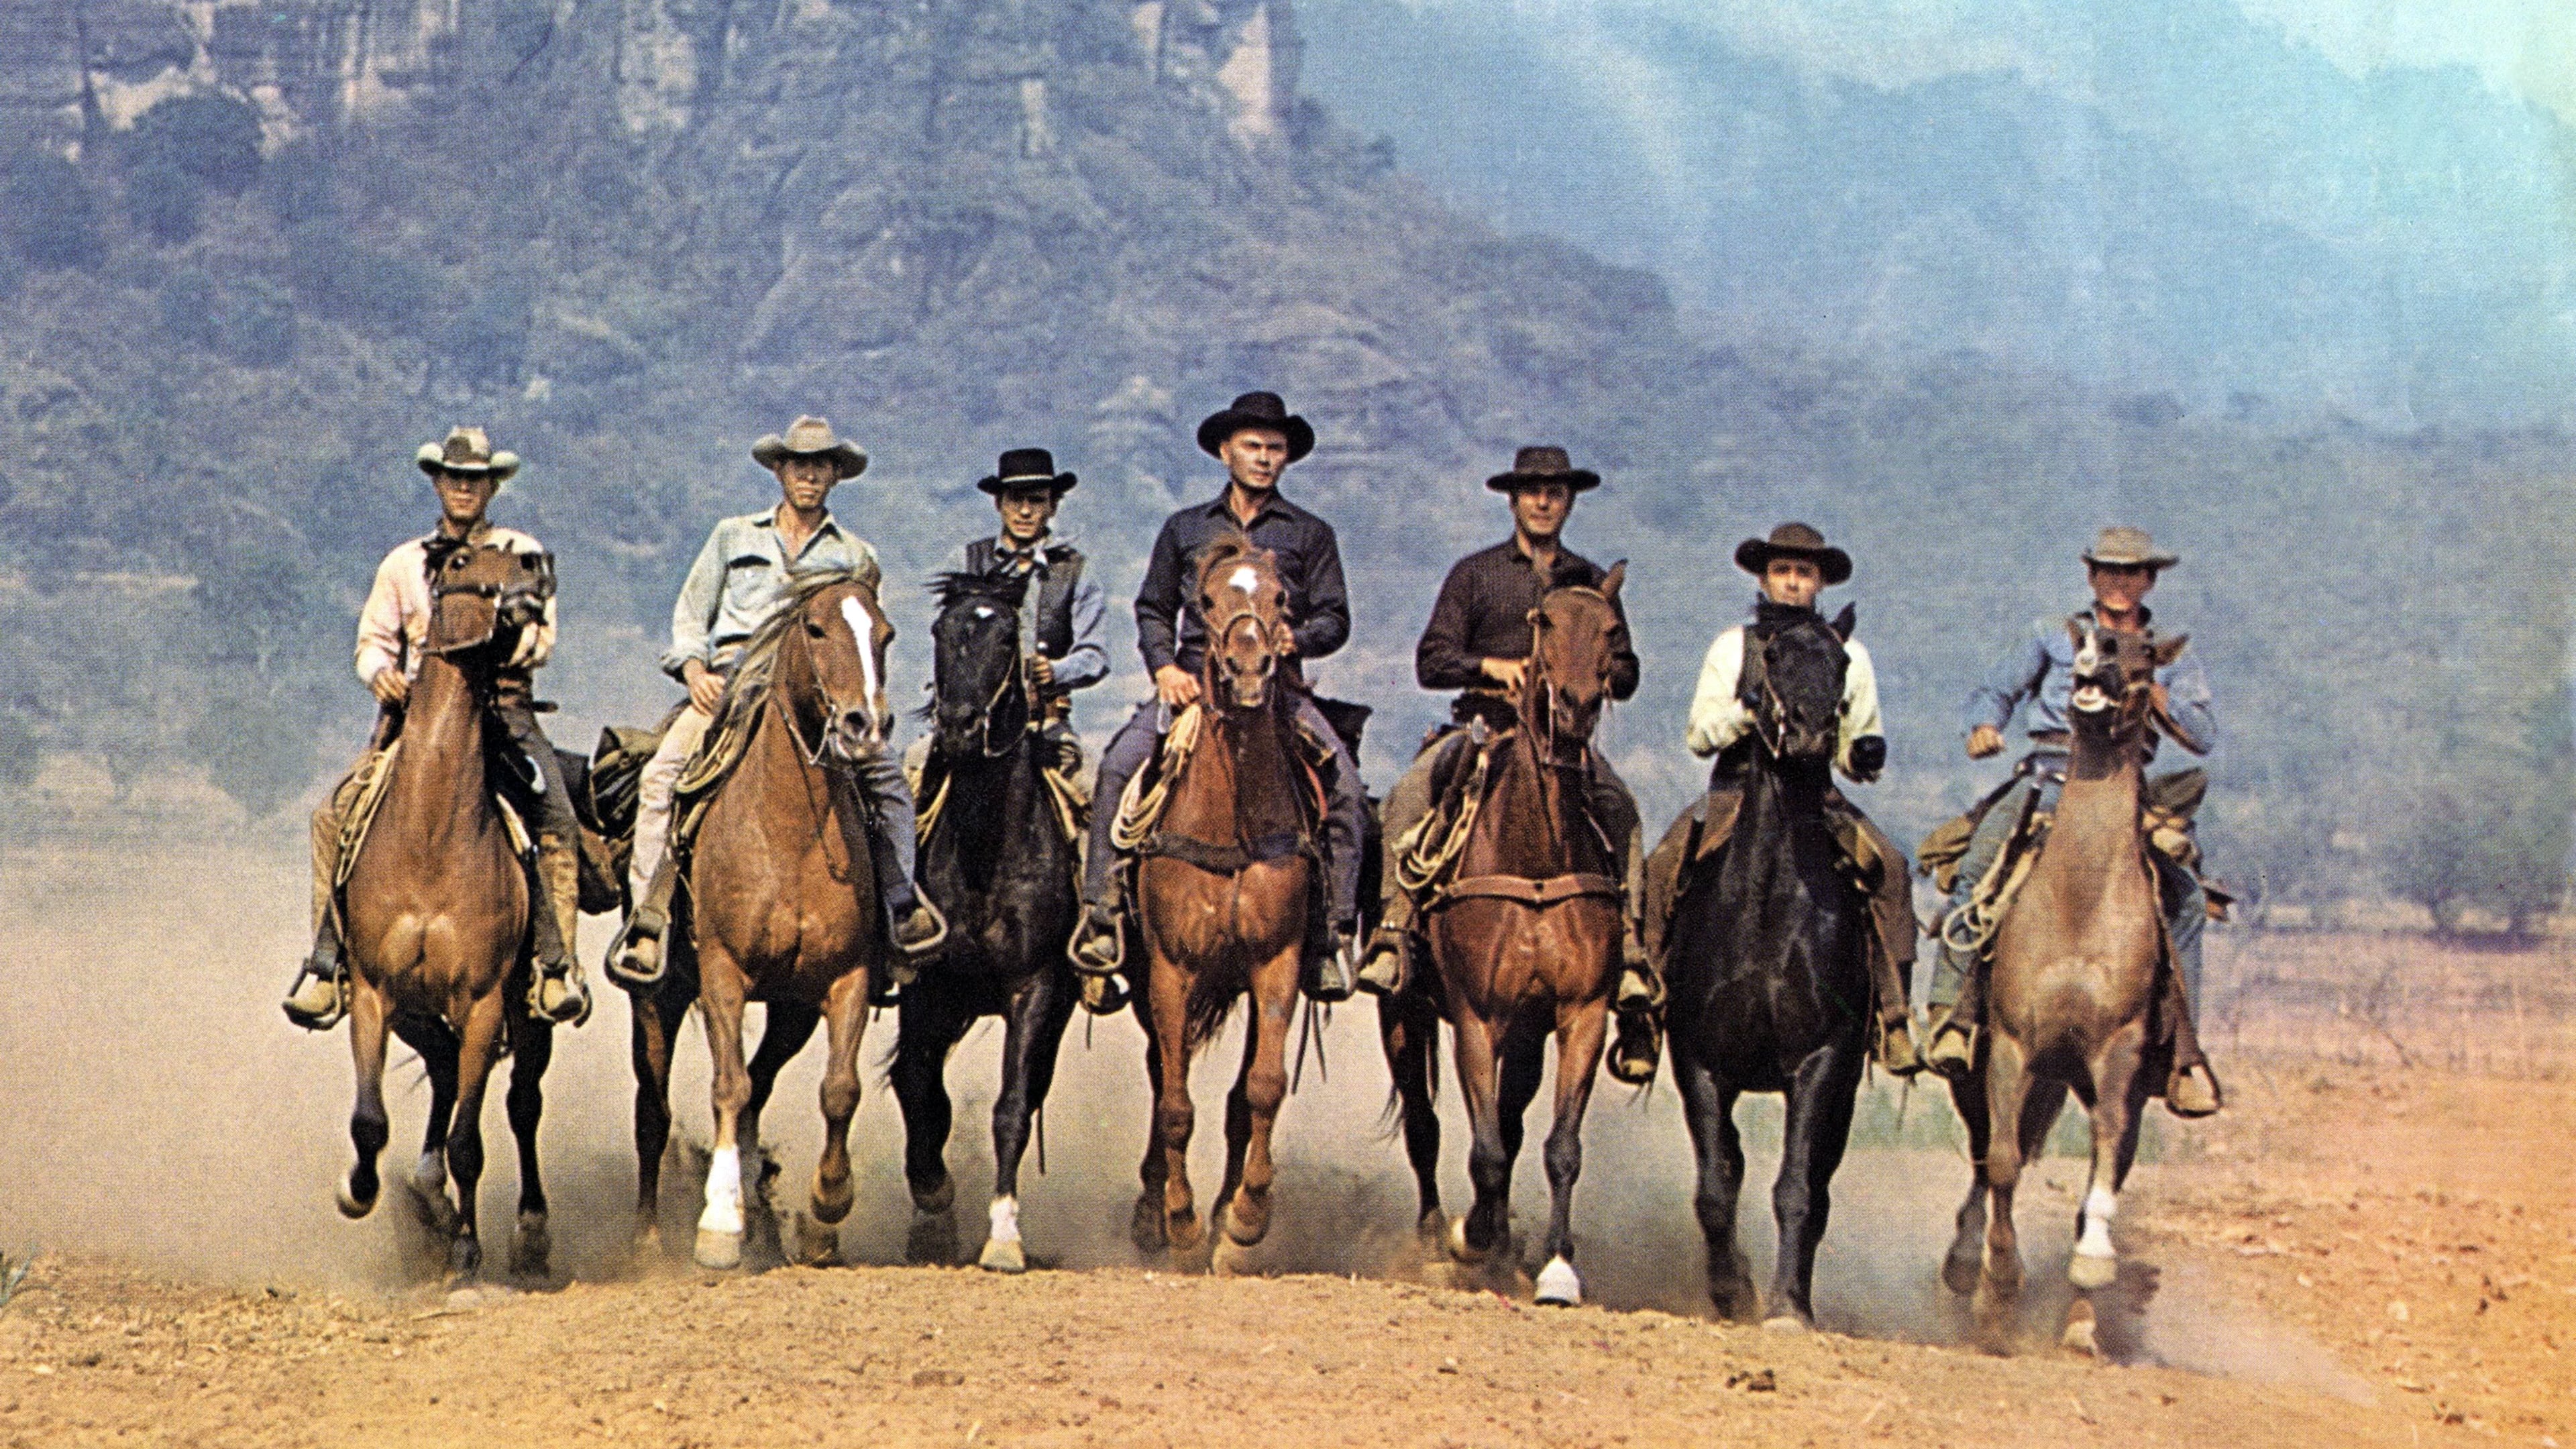 The Magnificent Seven (1960) 7 สิงห์แดนเสือ